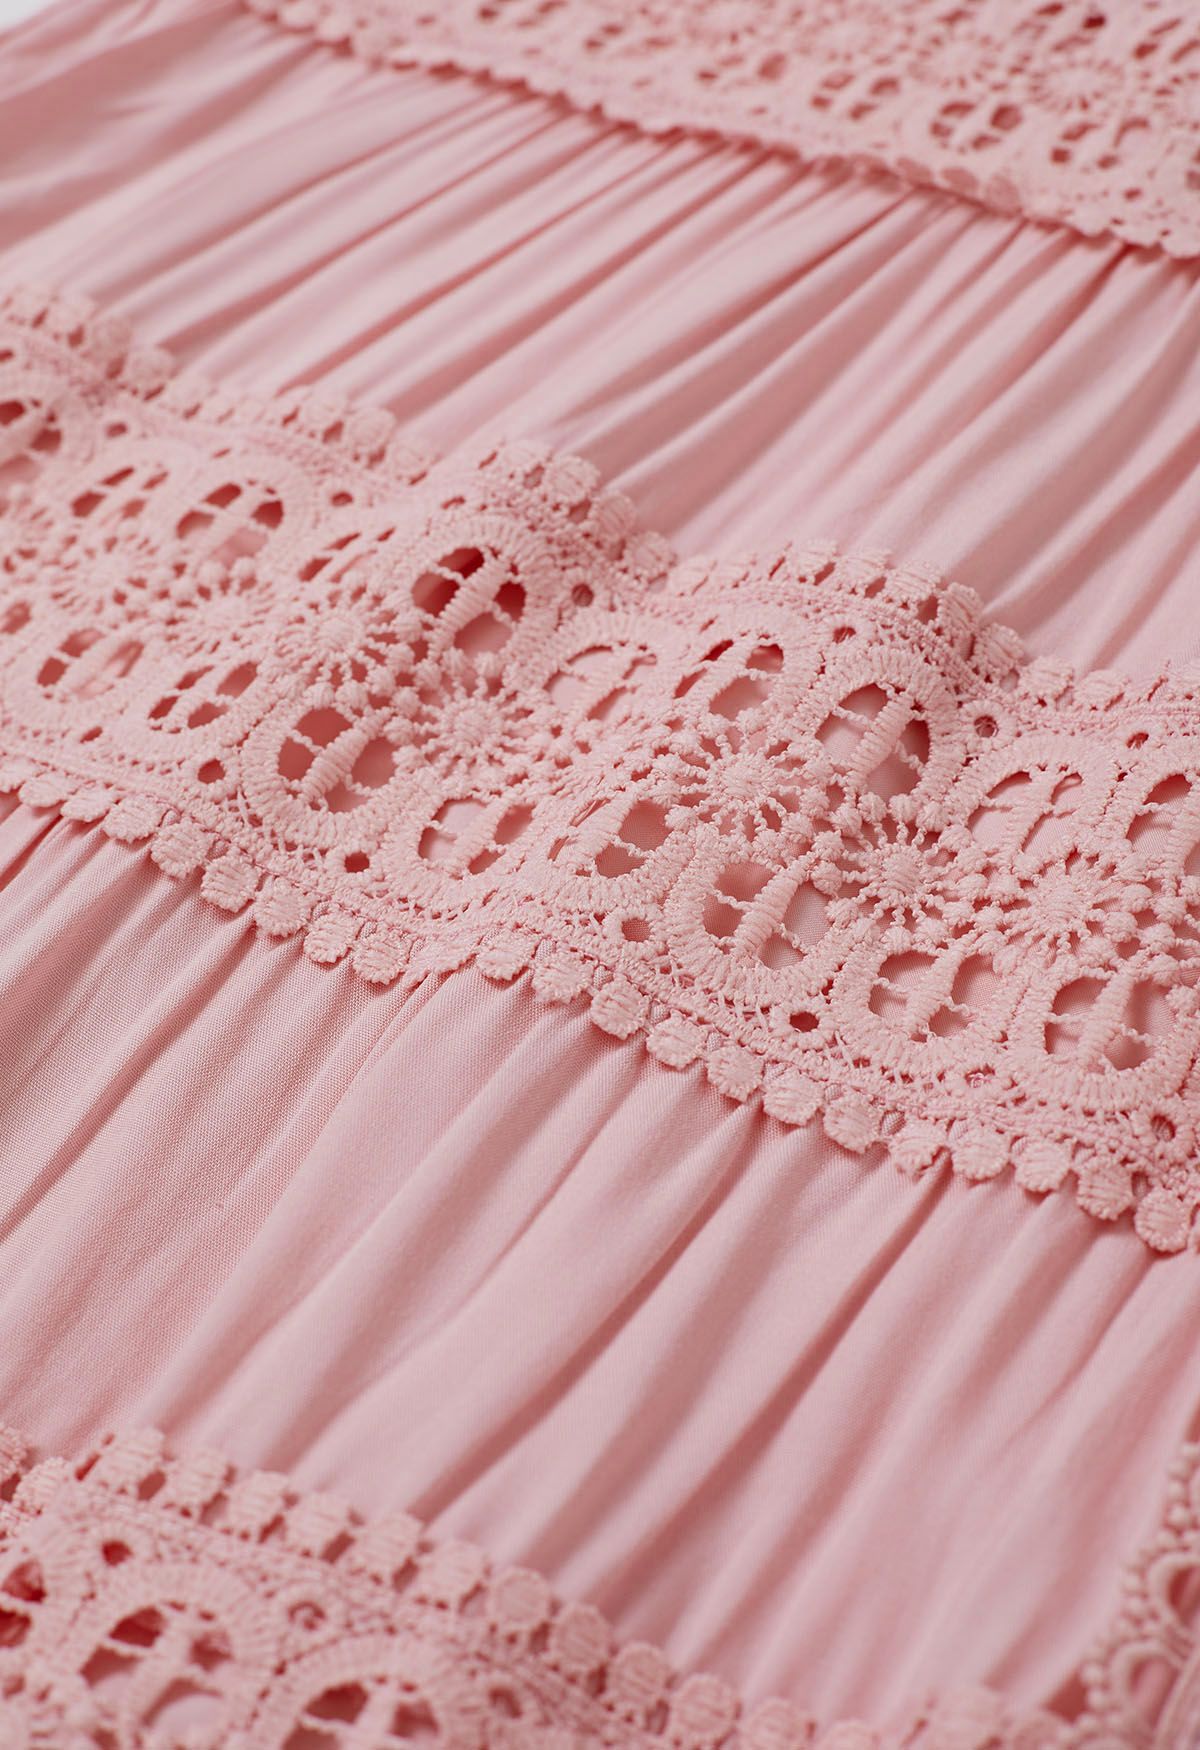 Crochet Panelled Tie-Waist Button Down Dress in Pink